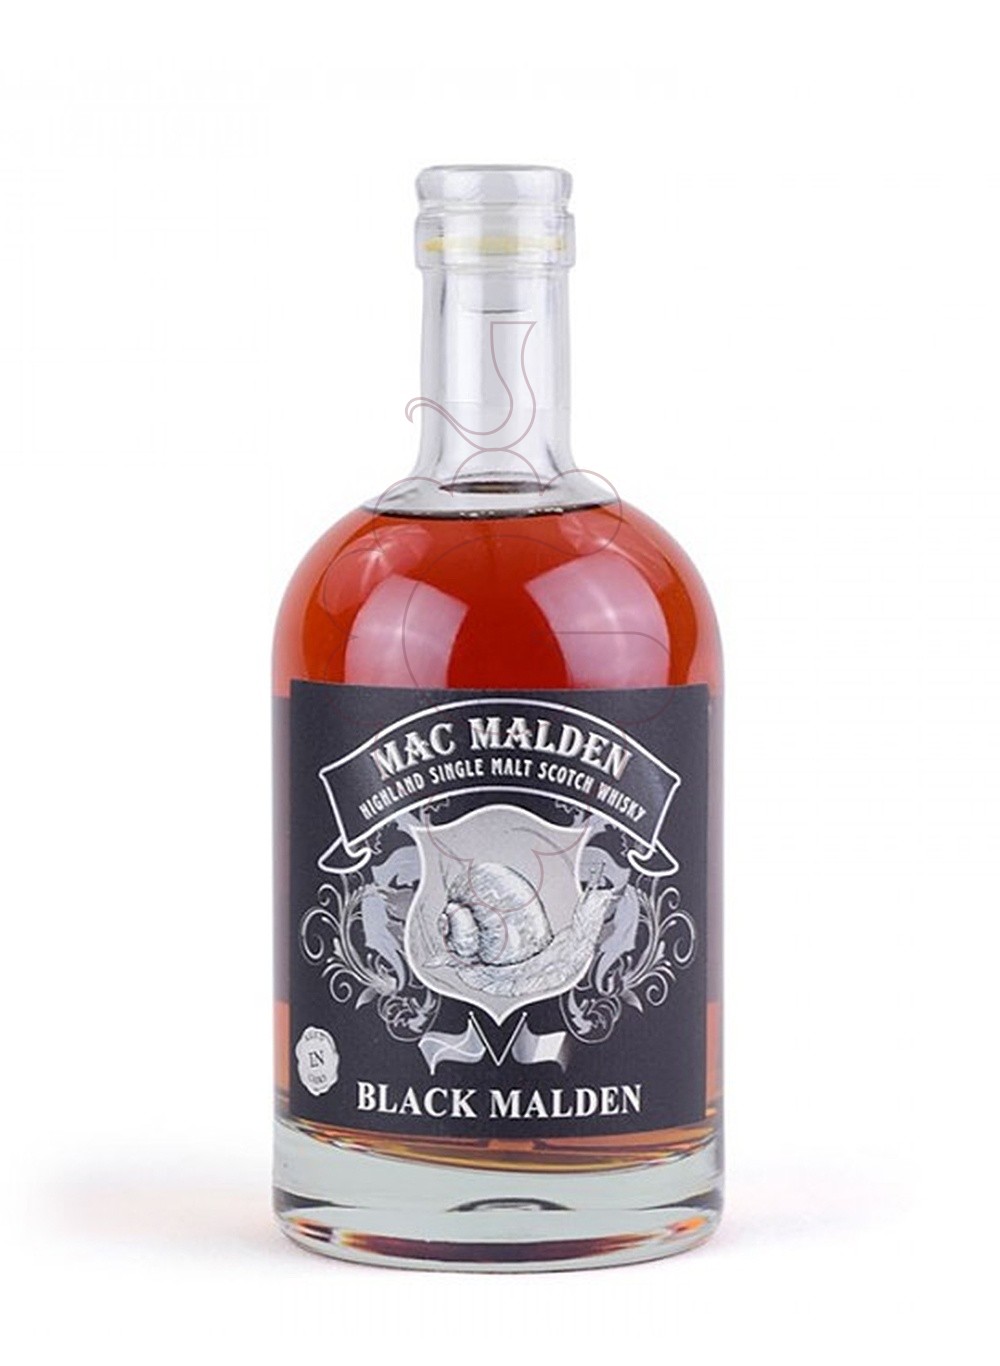 Foto Whisky Mac malden black malden 50 cl